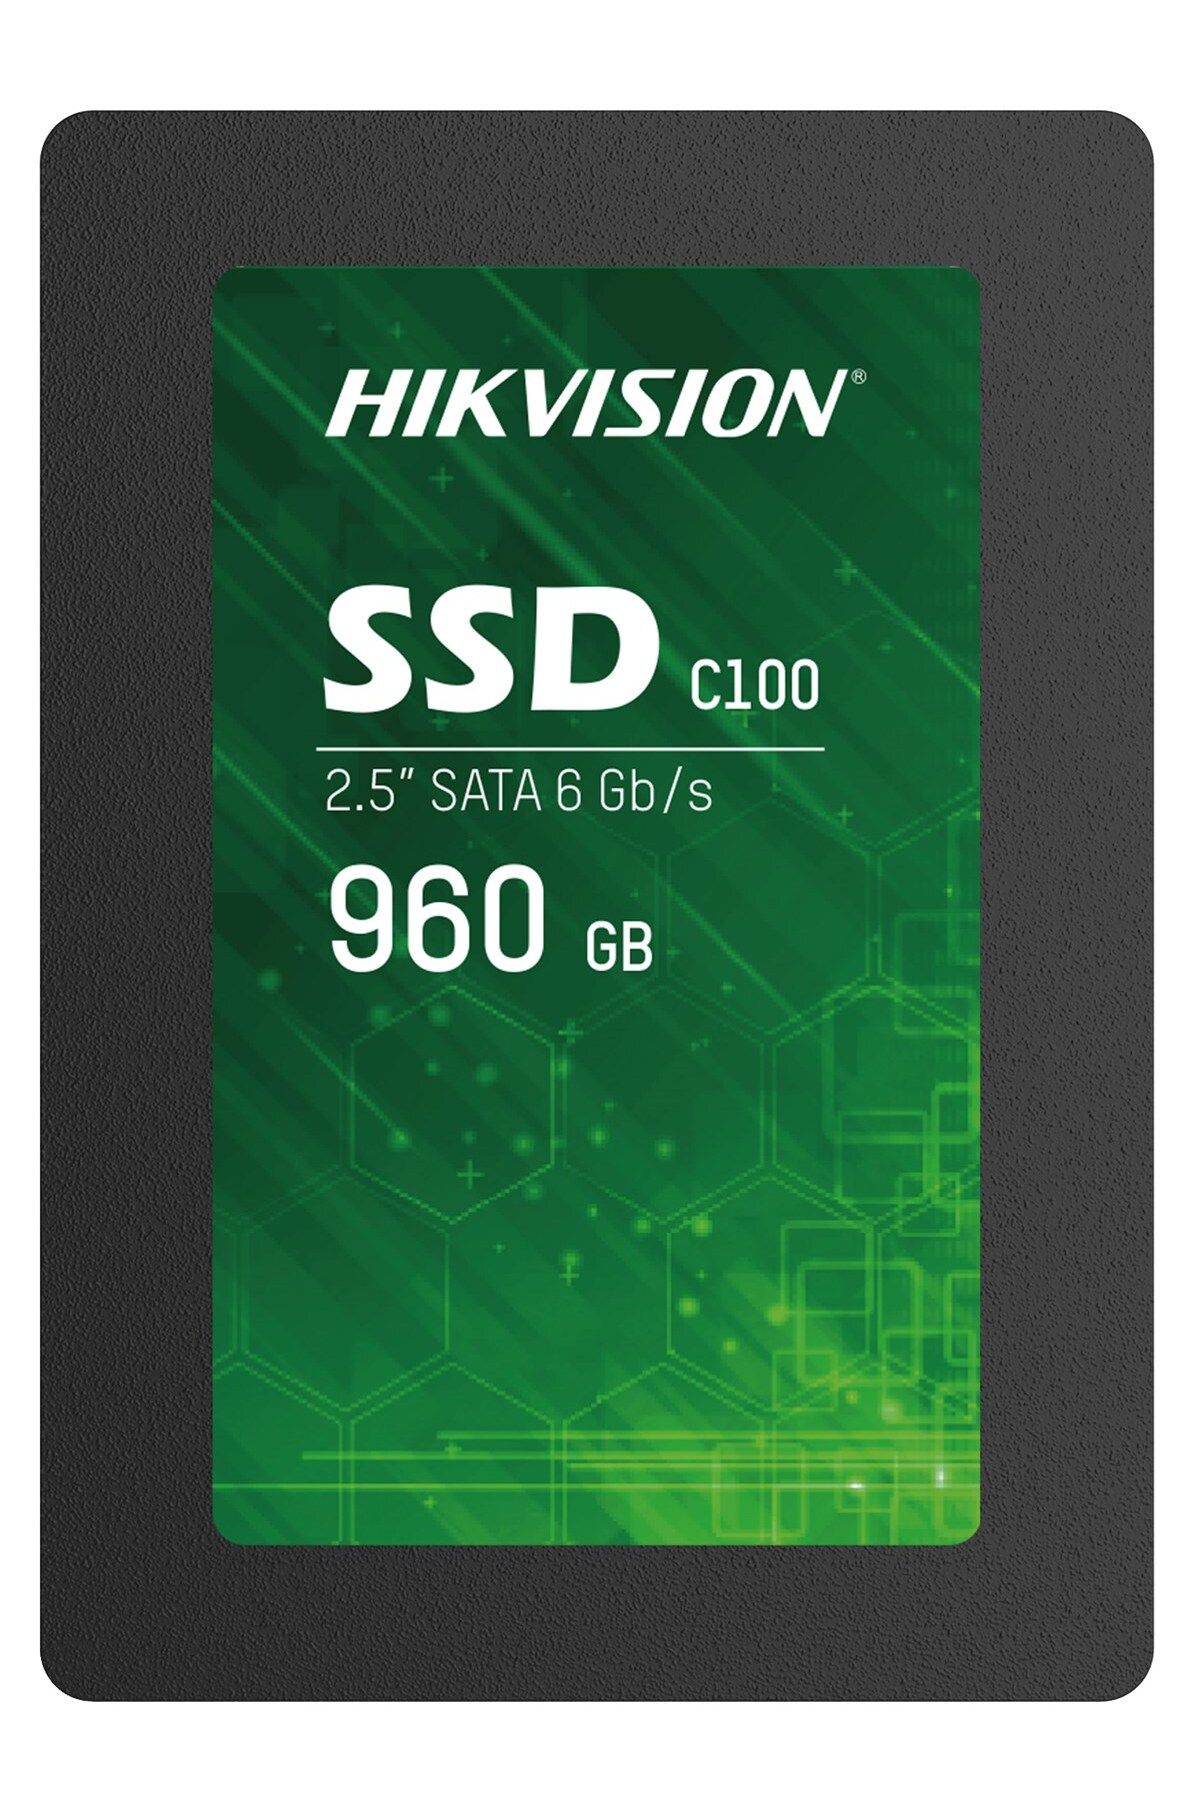 Hikvision 960 Gb C100 Hs-ssd-c100/960g 2.5" 960 Gb Sata 3 Ssd